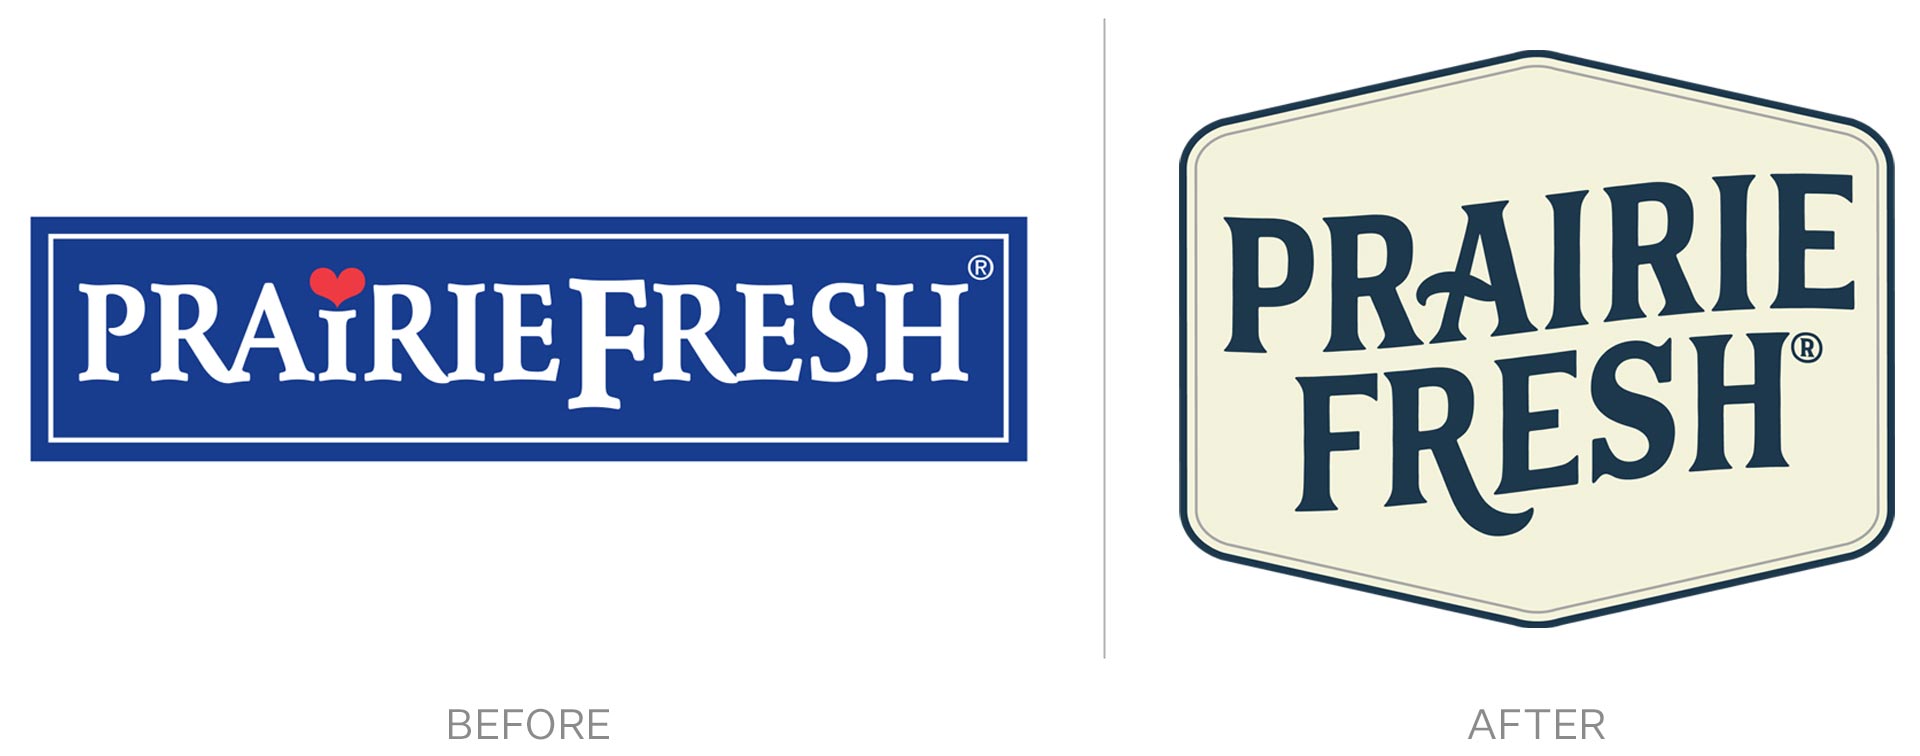 The previous Prairie Fresh logo alongside the new version.